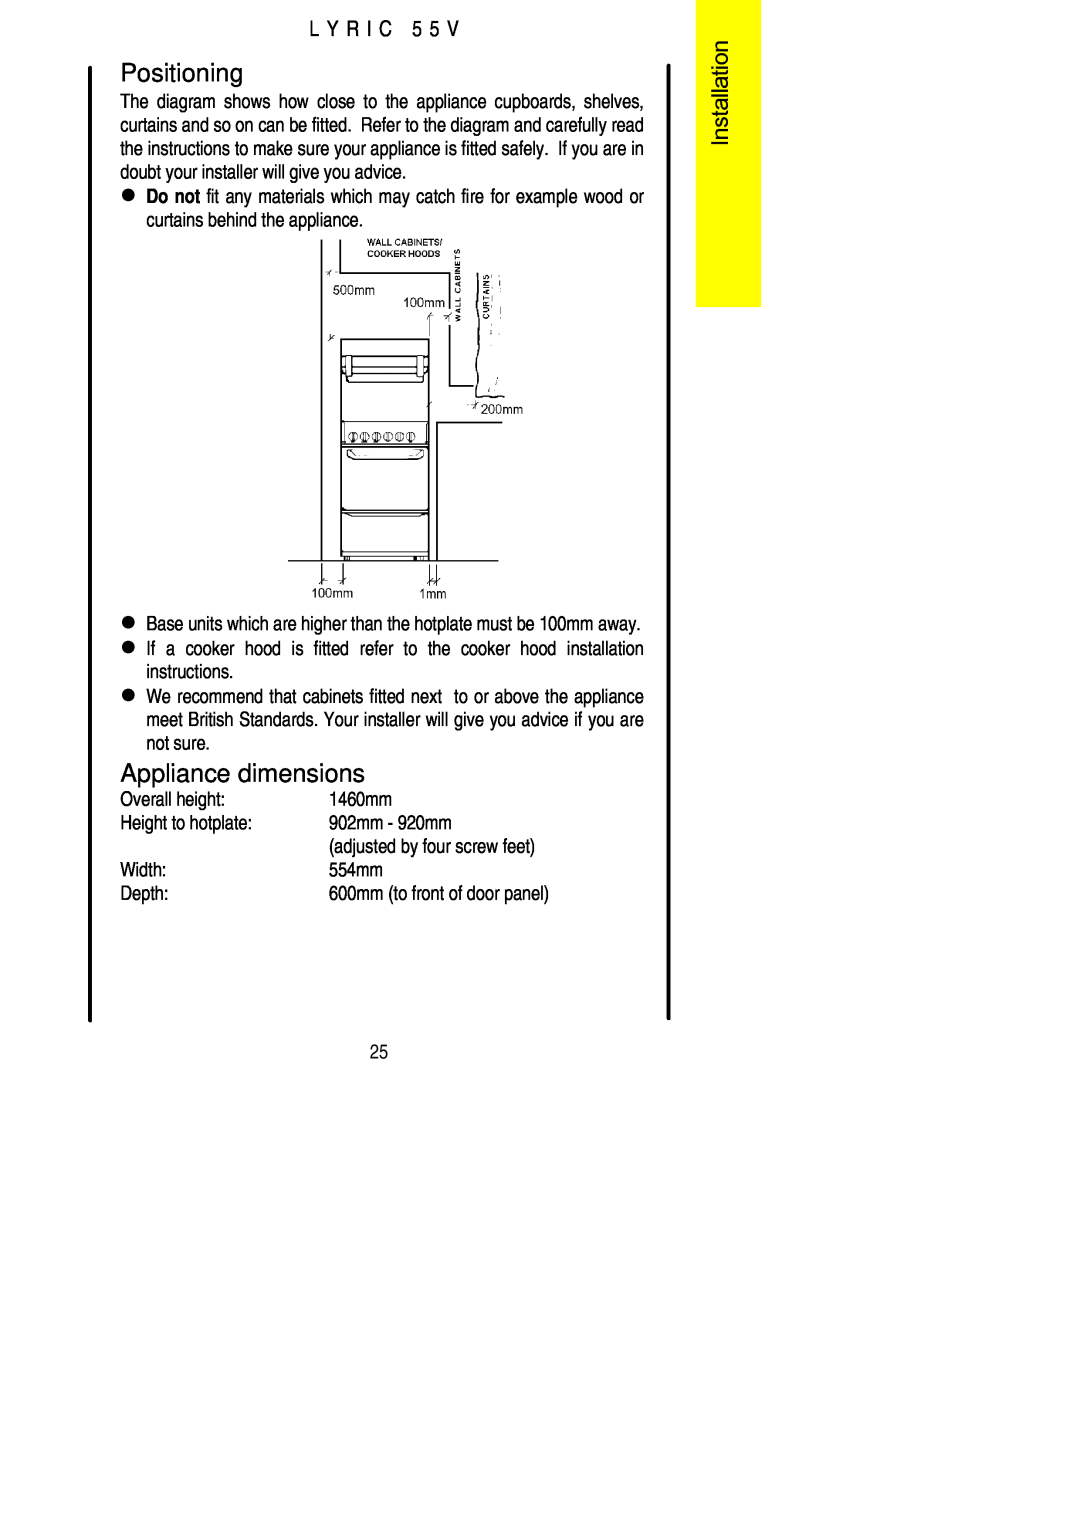 Electrolux 55V installation instructions Positioning, Appliance dimensions, L Y R I C 5 5 